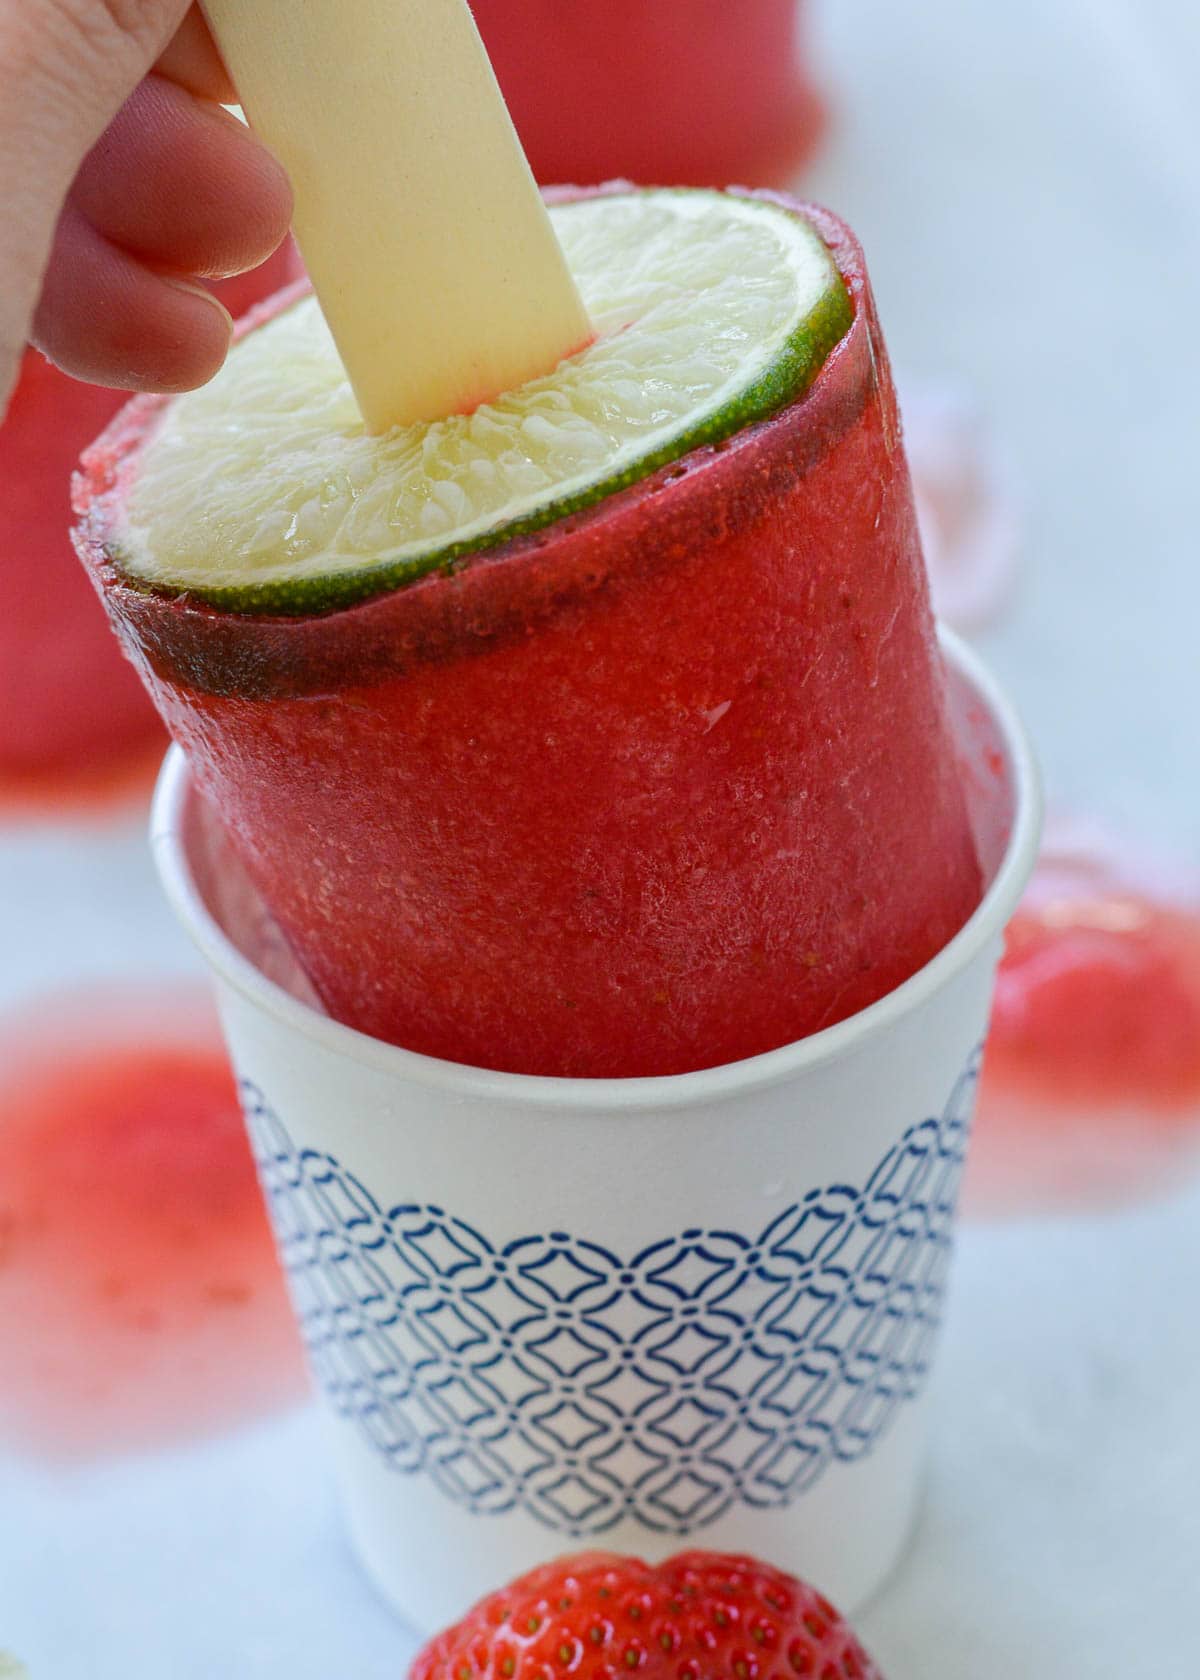 Spicy Watermelon Margarita Ice Pops Recipe